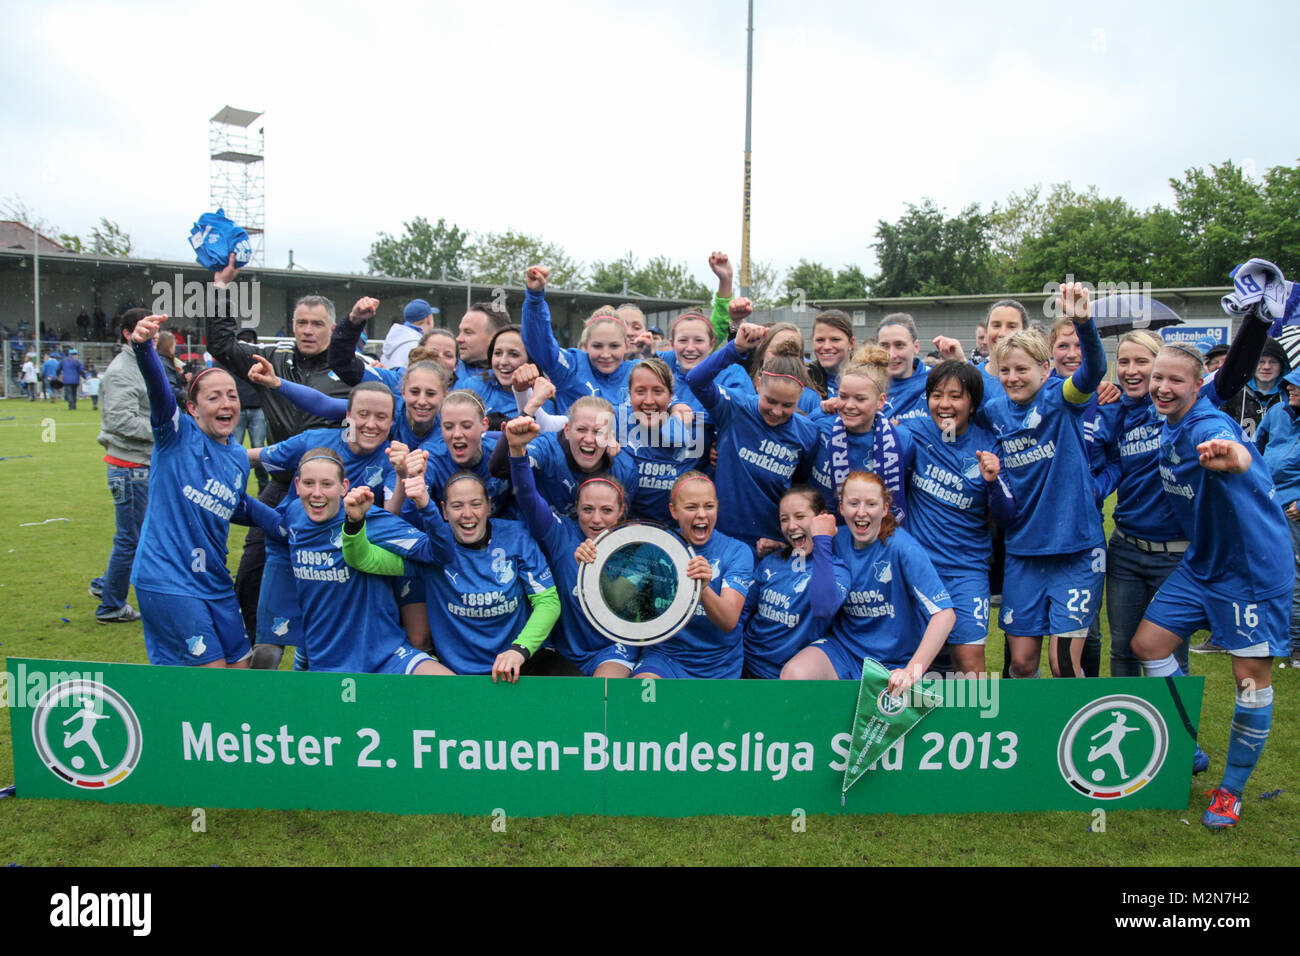 1899 Hoffenheim - Meister 2. Frauen-Bundesliga Süd 2012/13 Stock Photo -  Alamy